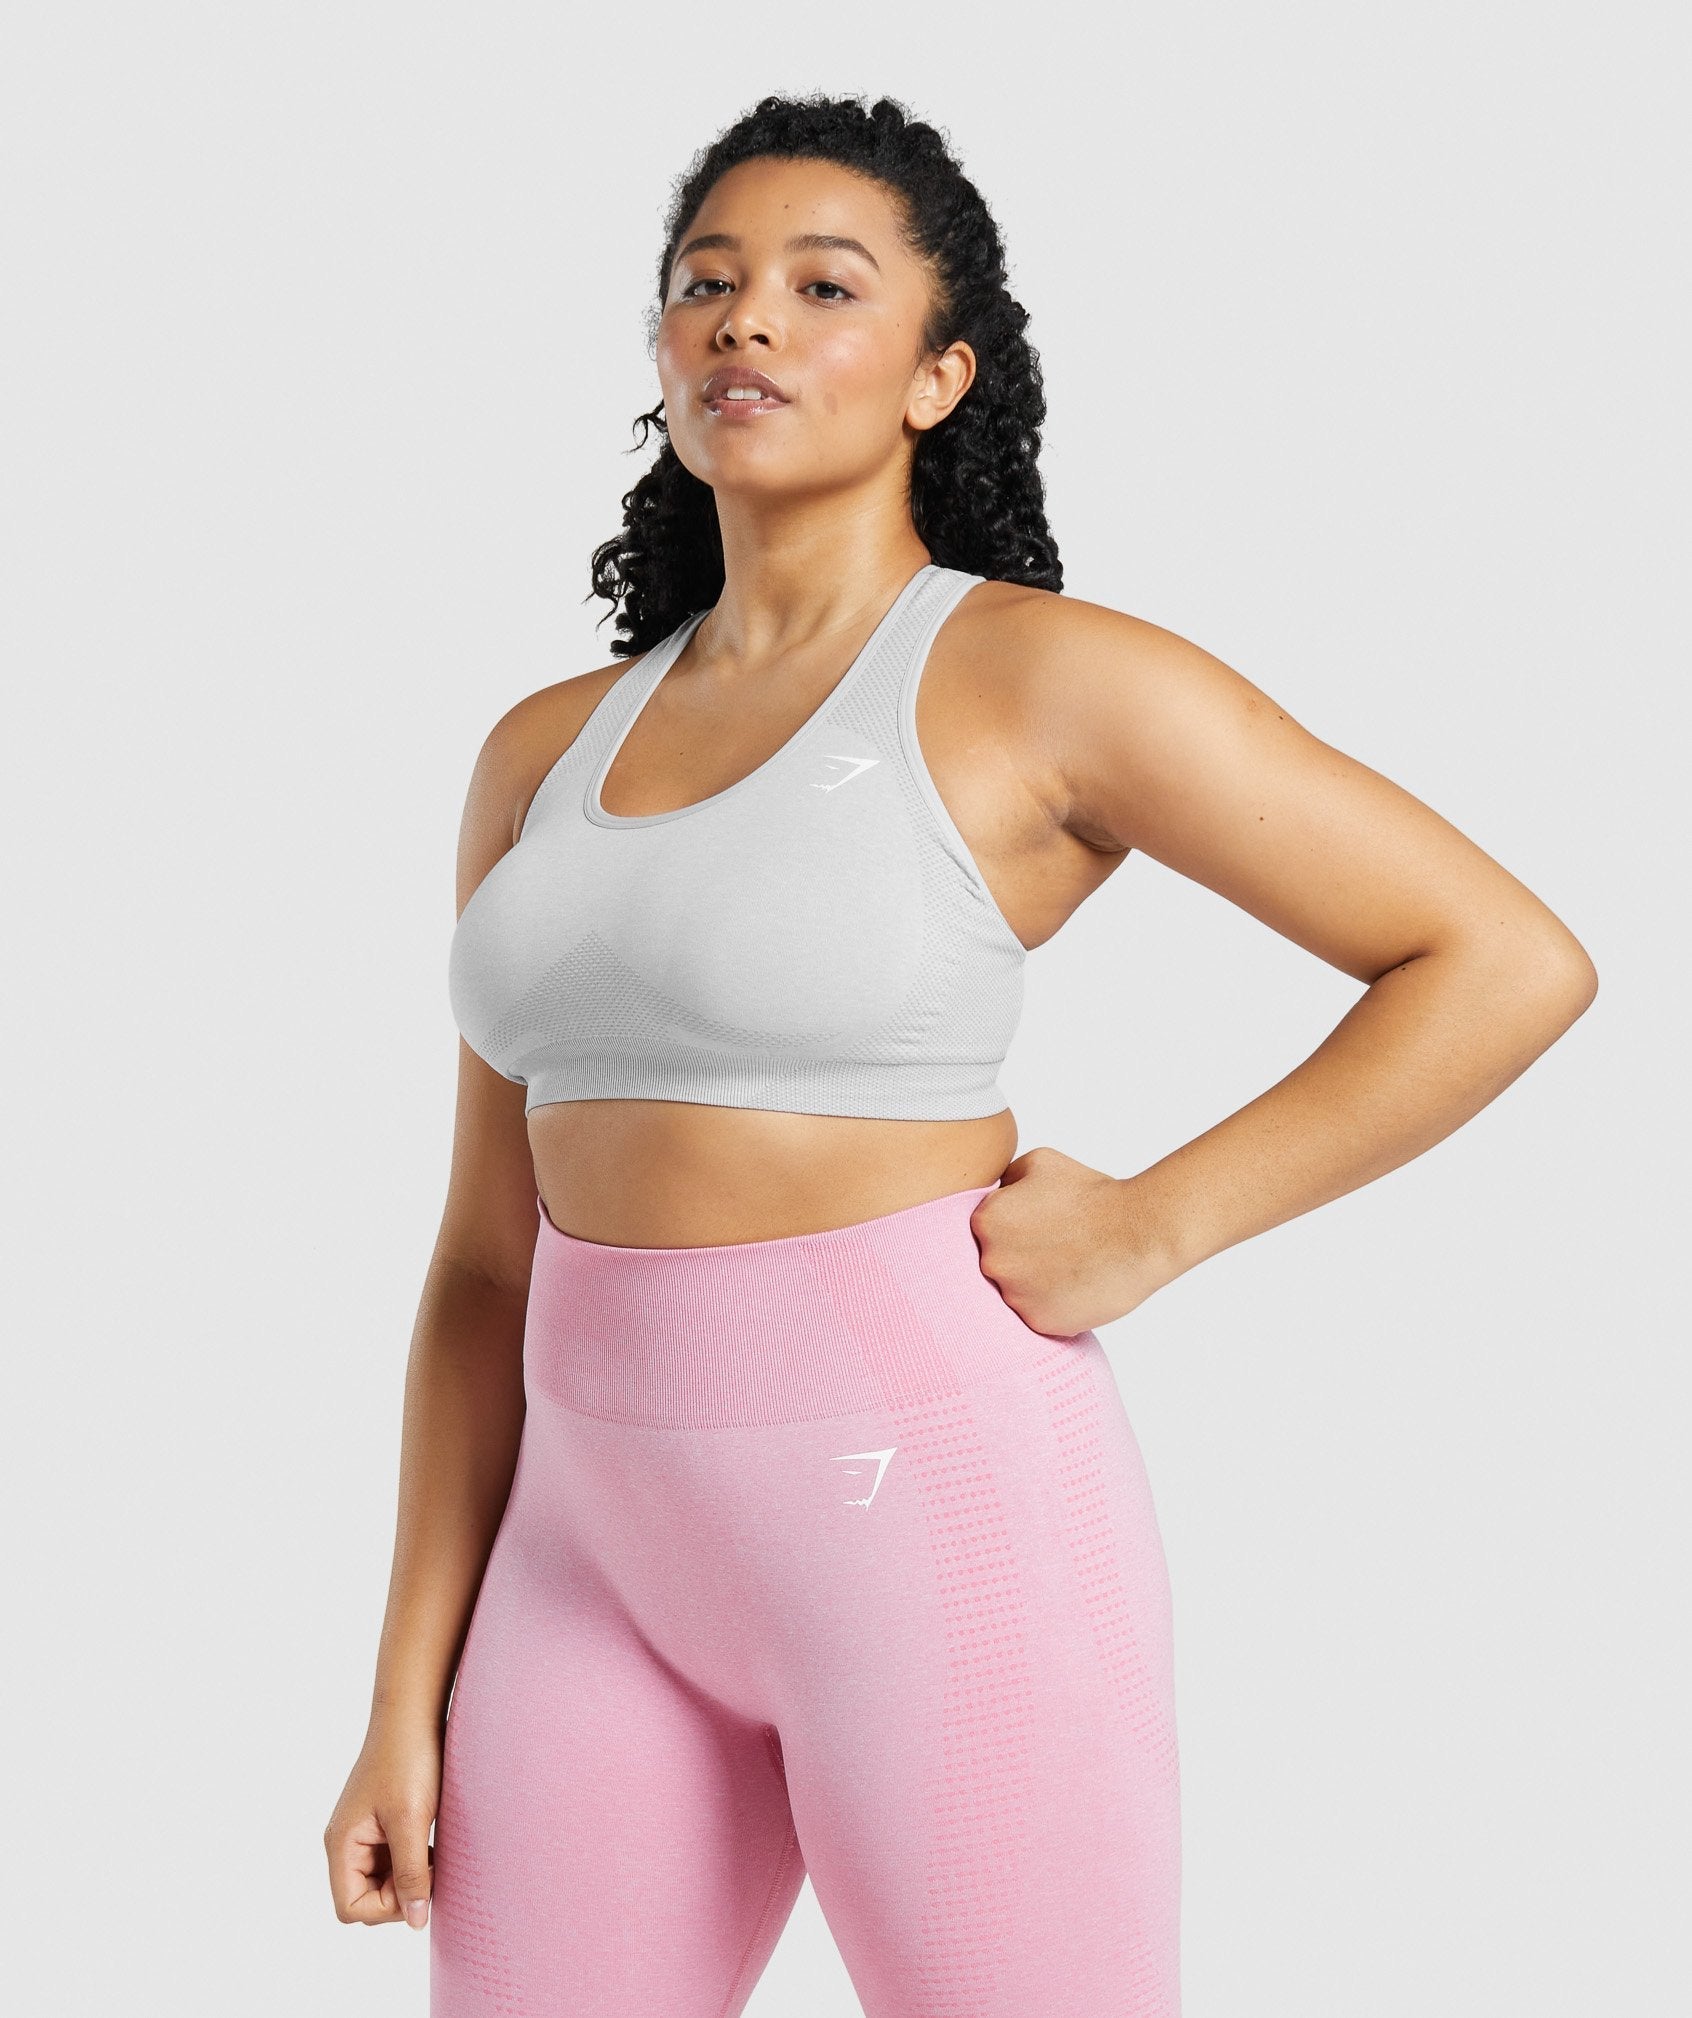 Gymshark vital seamless sports bra Size M - $28 - From Monse